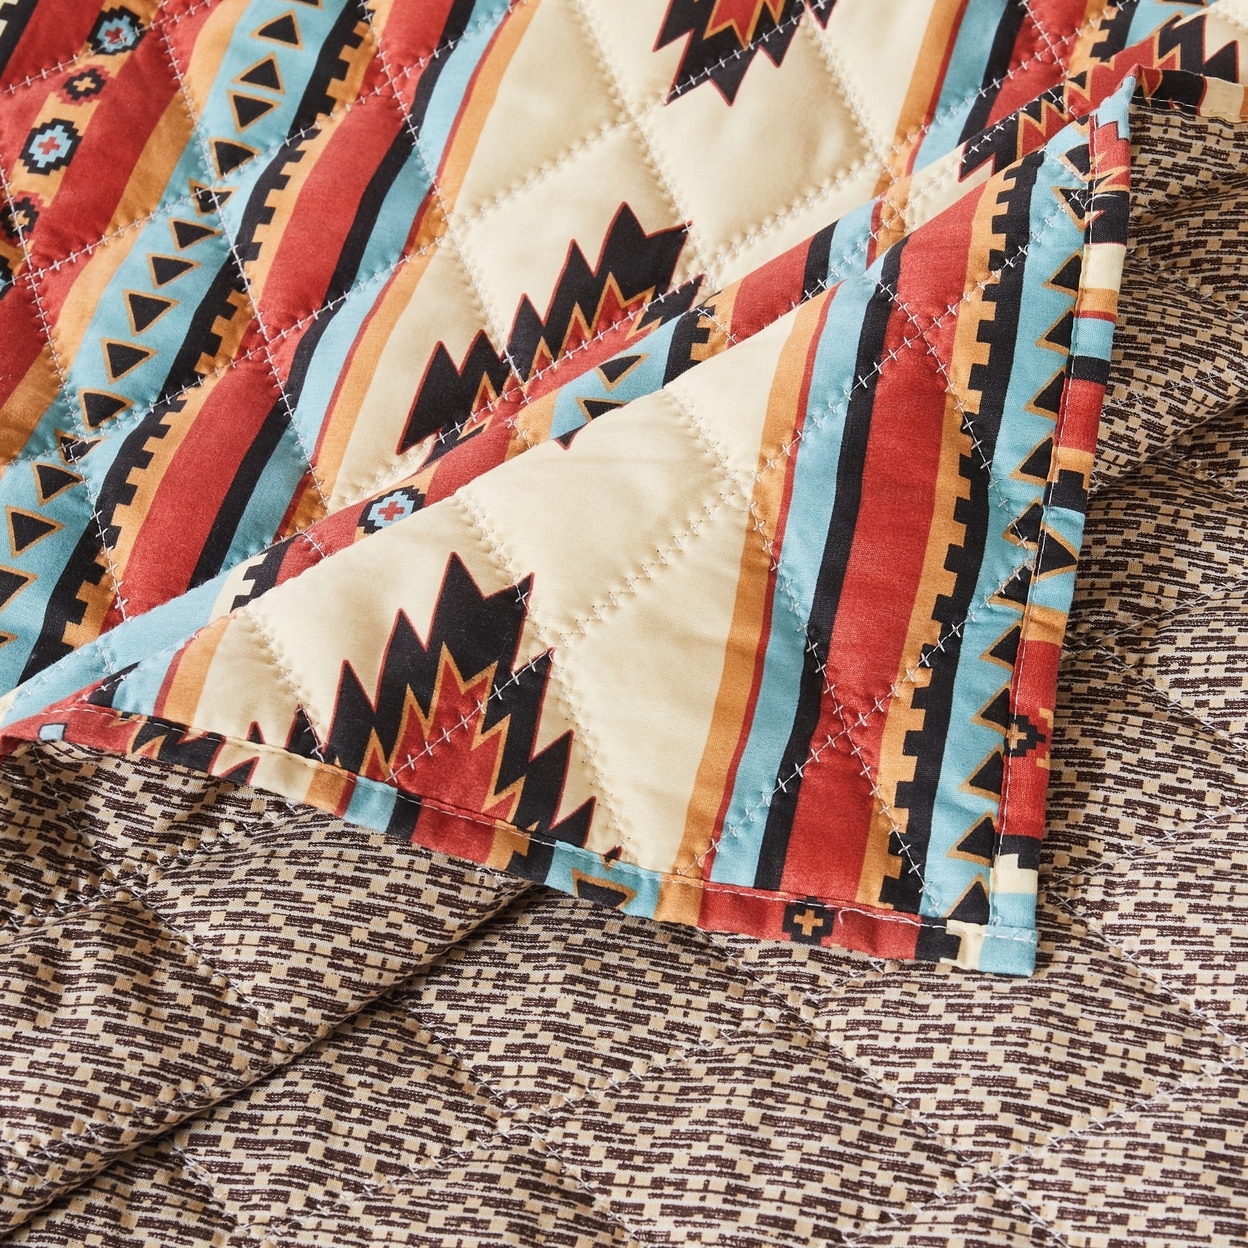 Tagus 60 Inch Throw Blanket, Natural Southwest Patterns, Machine Quilted- Saltoro Sherpi